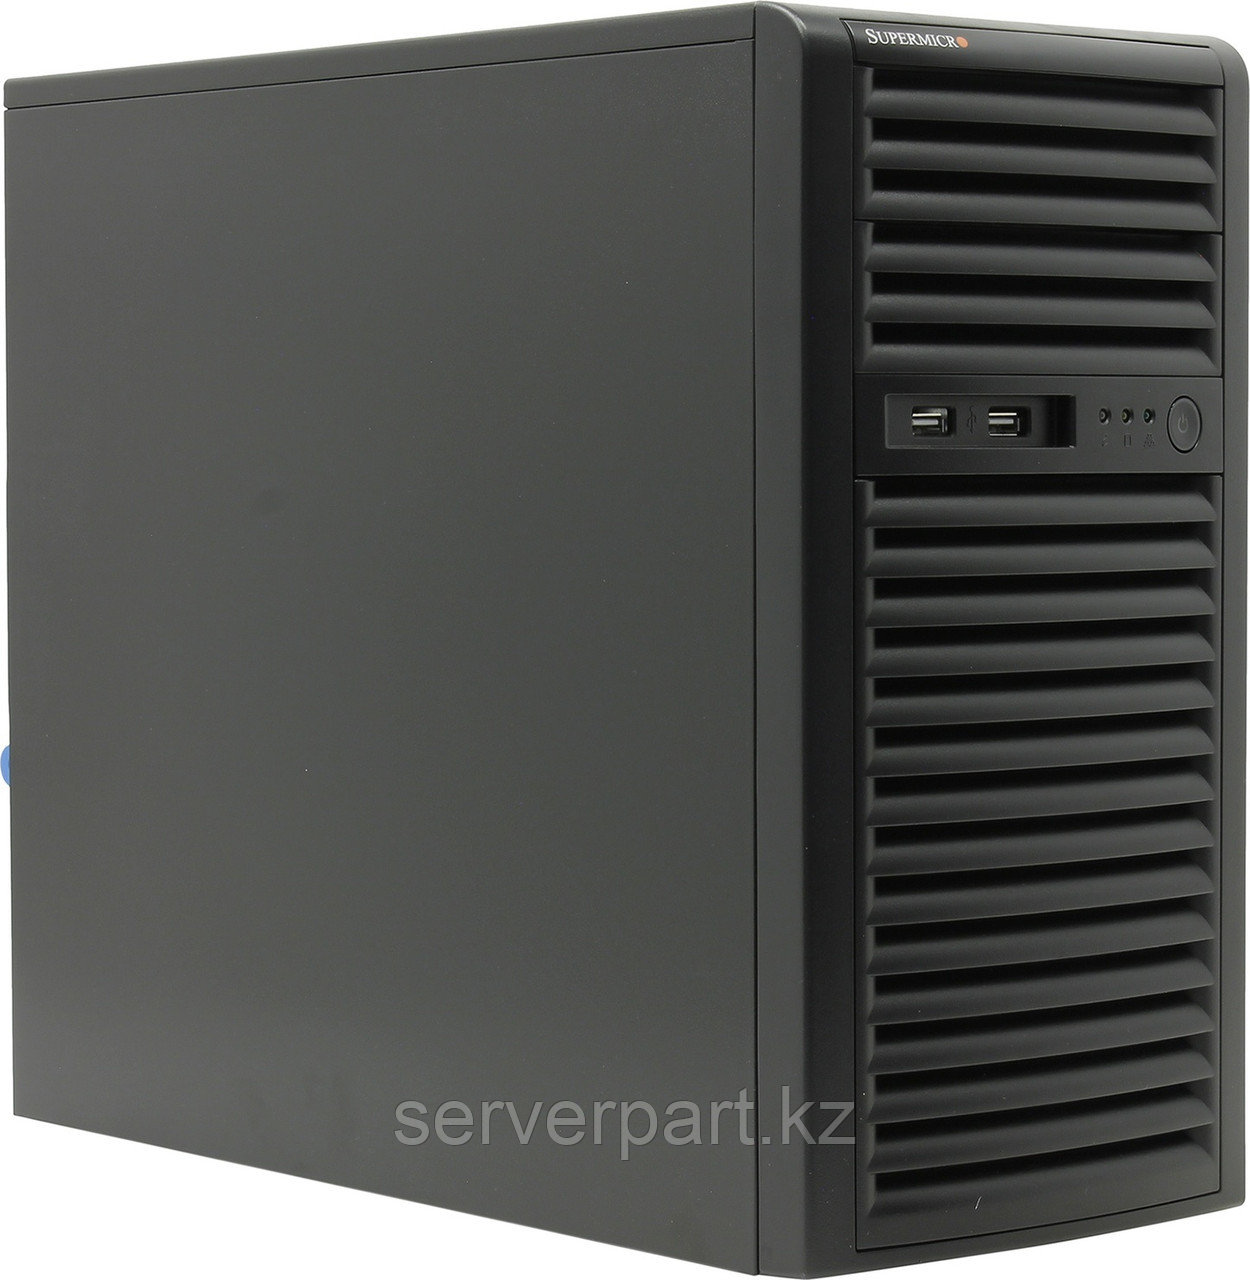 Сервер Supermicro SYS-5039D Tower/4-core intel xeon E3-1220v6 3GHz/32GB UDIMM nECC/1x480GB SSD RI Hyb